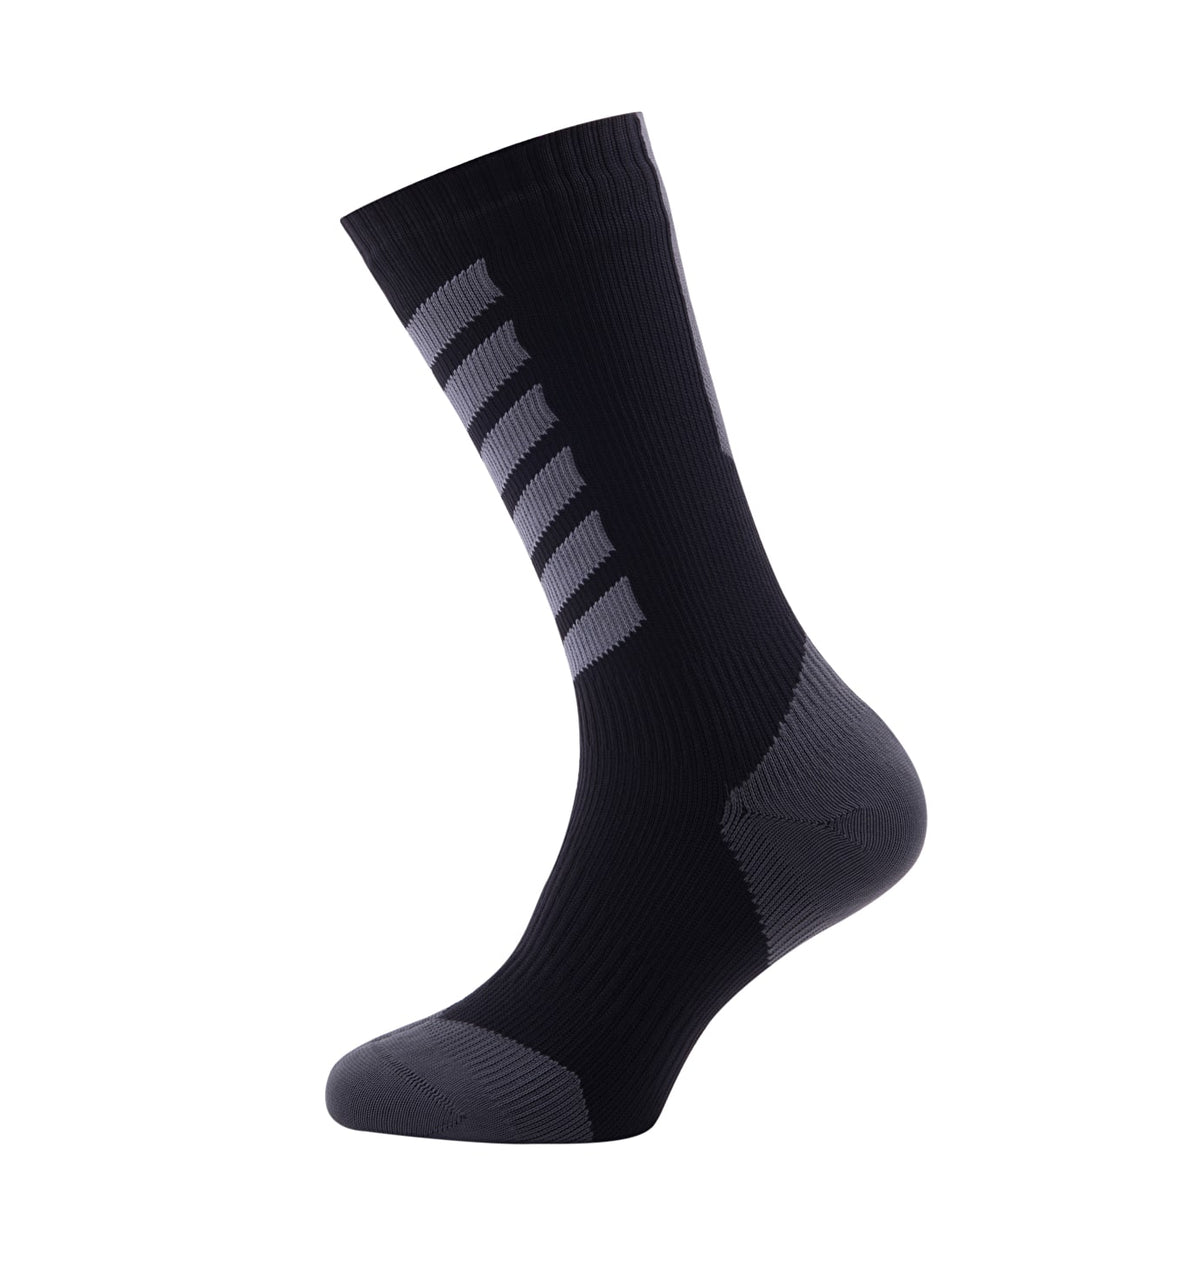 SealSkinz Waterproof Socks MTB Mid Mid Socks Hydrostop Black/Charcoal/Anthracite